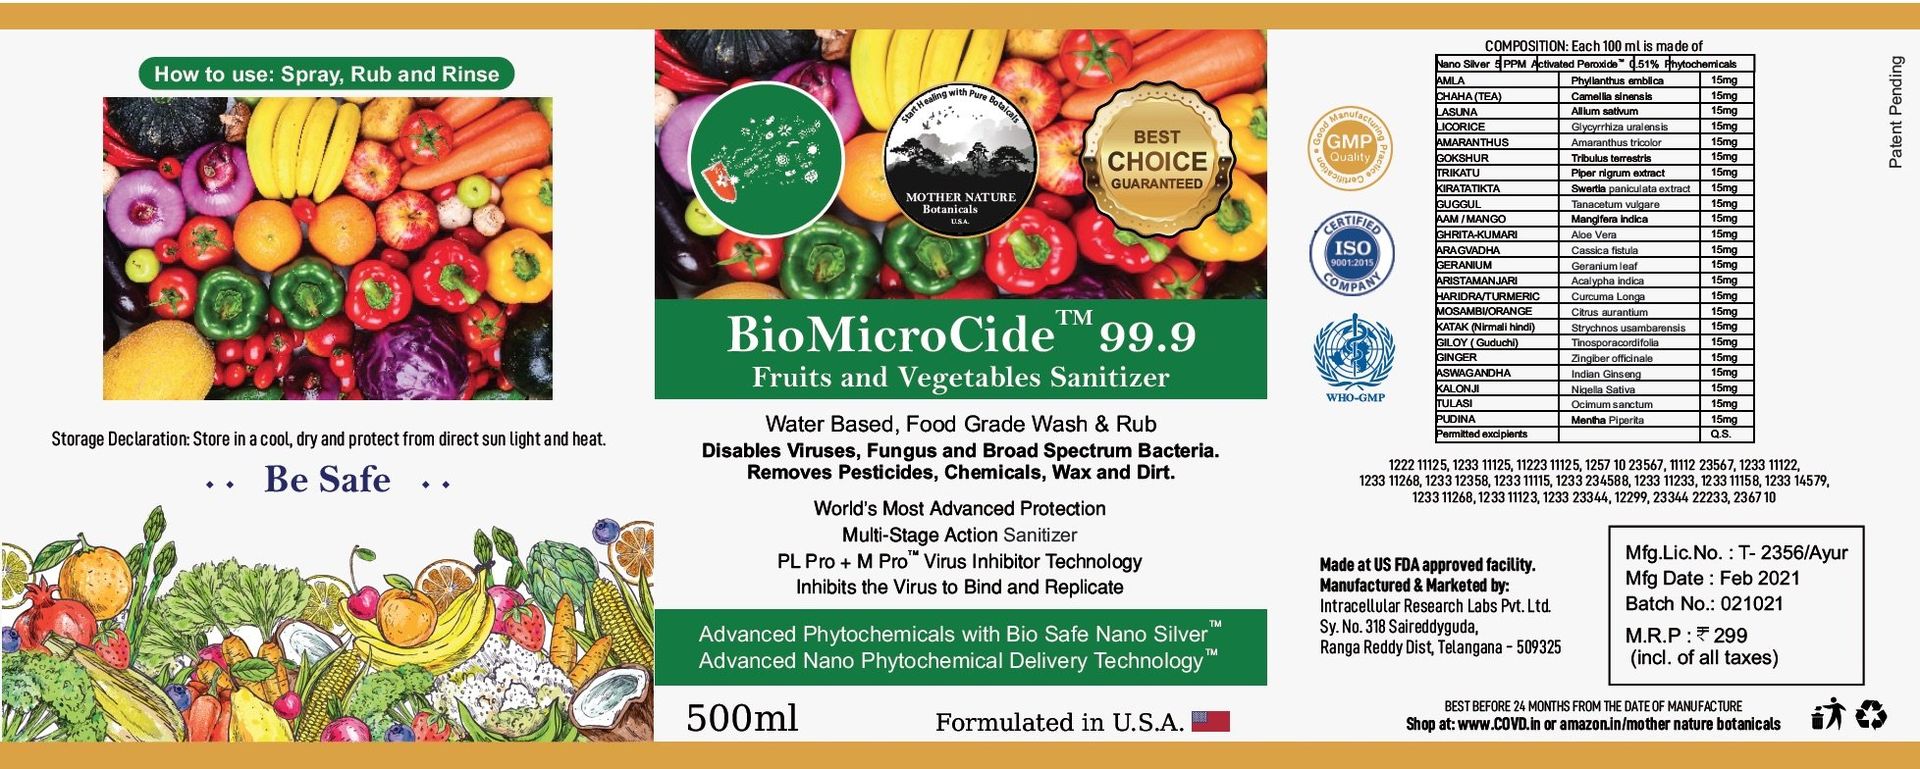 Mother Nature Botanicals BioMicroCide 99.9 - hfnl!fe